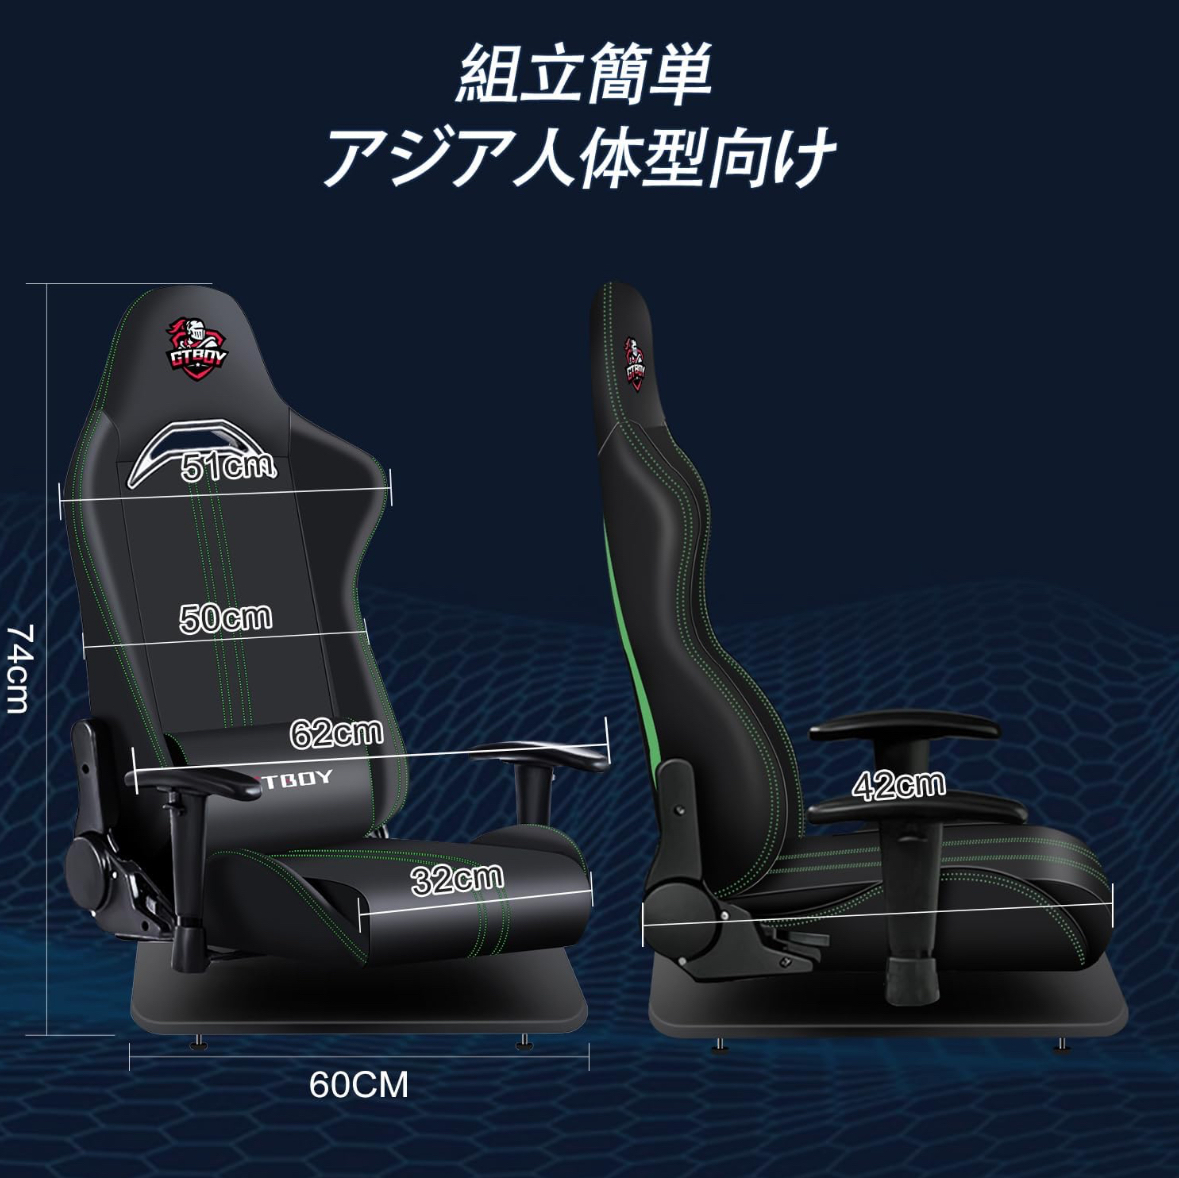 ge-ming chair "zaisu" seat ge-ming "zaisu" seat lumber support handle navy blue stand "zaisu" seat 170° reclining 3D armrest 360° rotation 